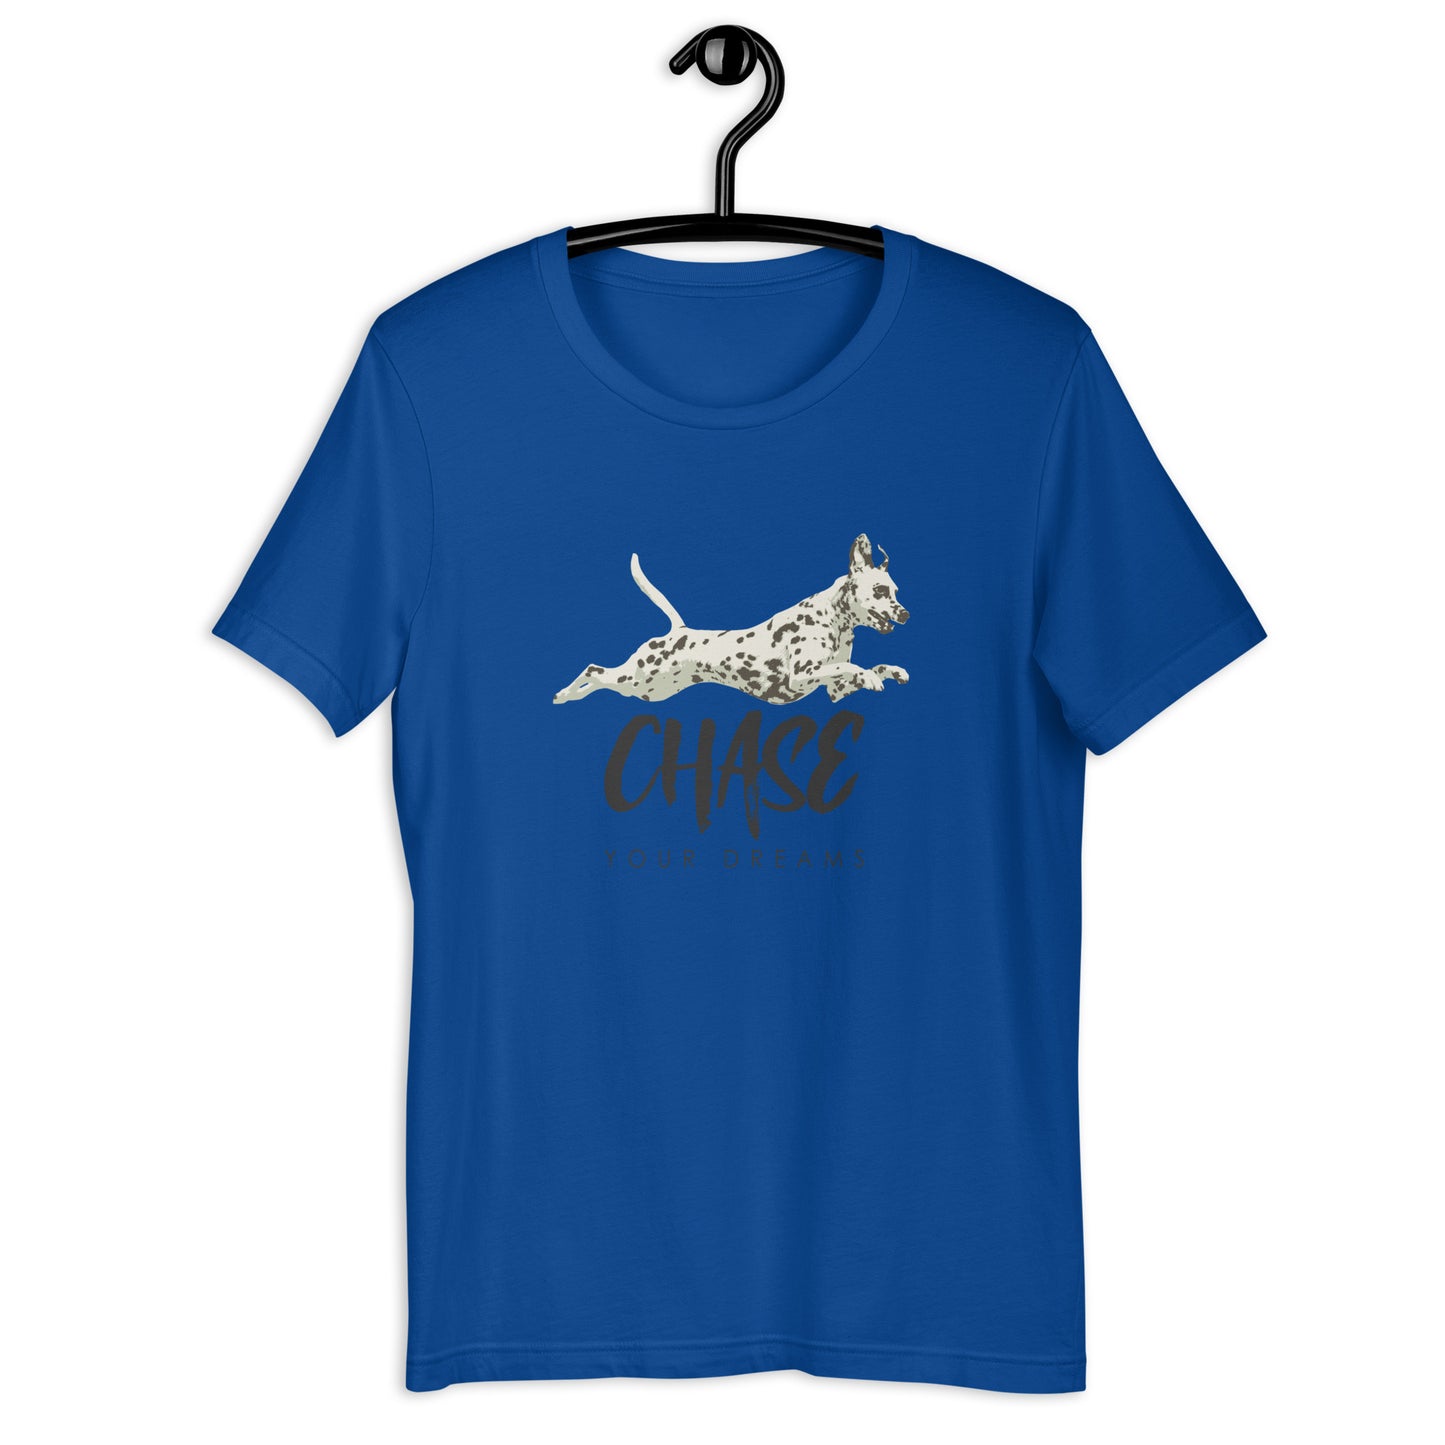 CHASE YOUR DREAMS - Dalmatian Unisex t-shirt